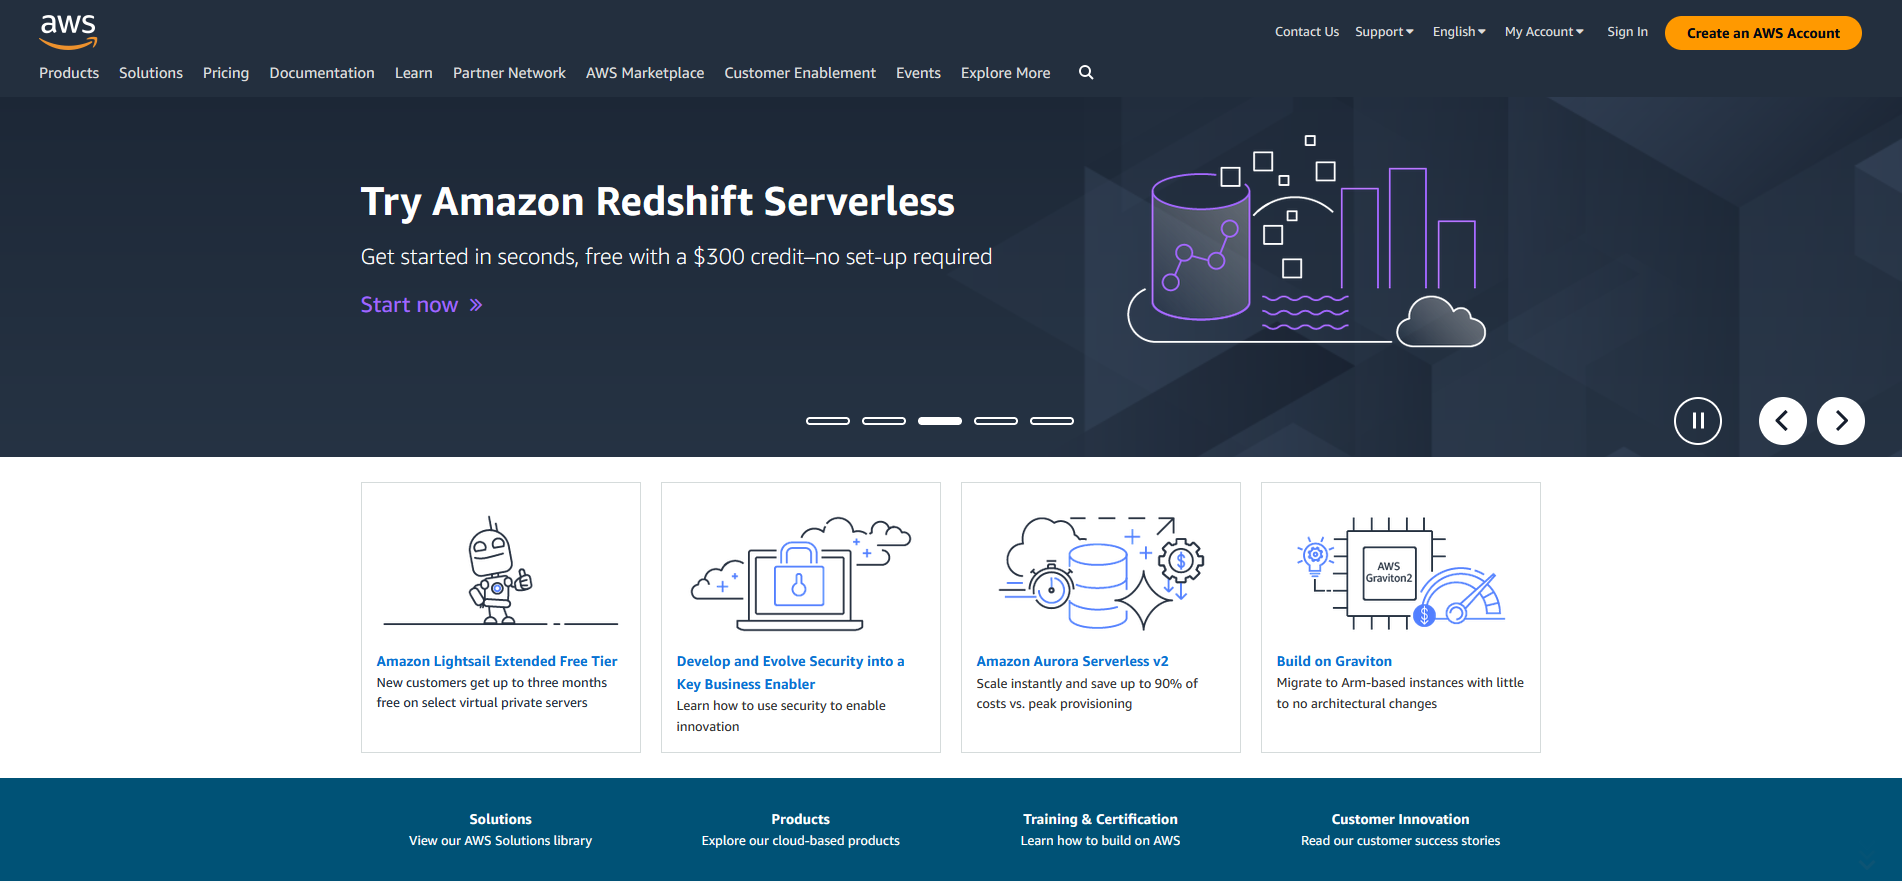 Top 5 Cloud Services Providers | Amazon Web Services